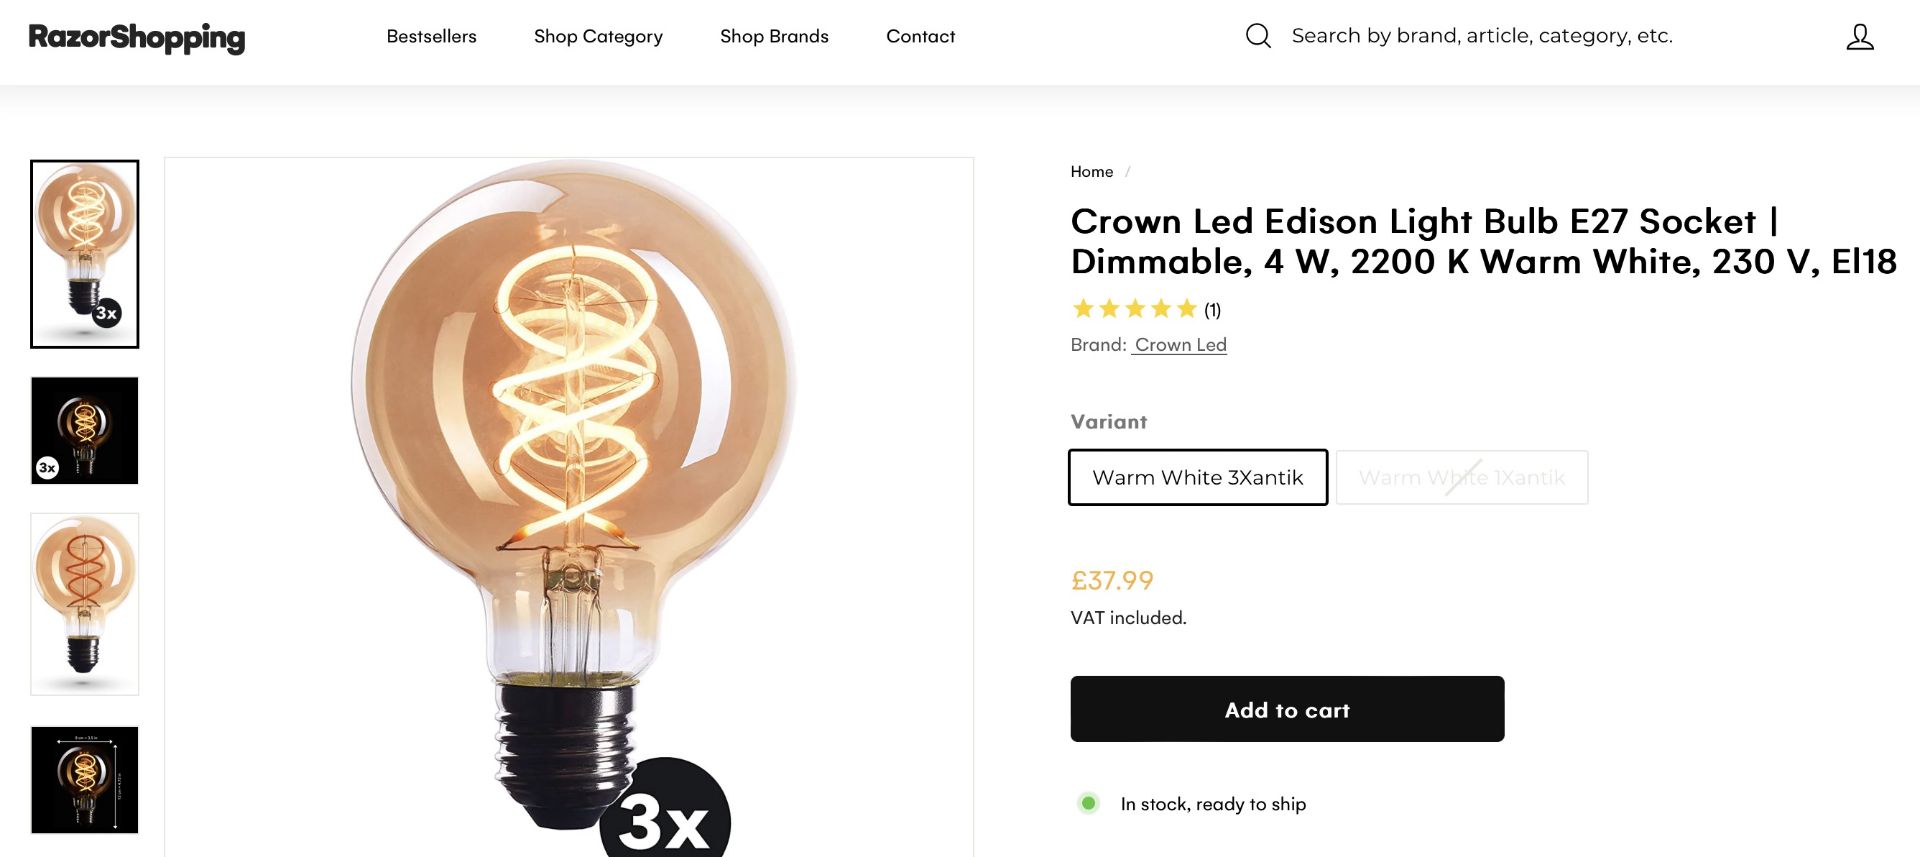 10 x Crown Led Edison Light Bulbs E27 - NEW & BOXED - RRP Â£120+ !